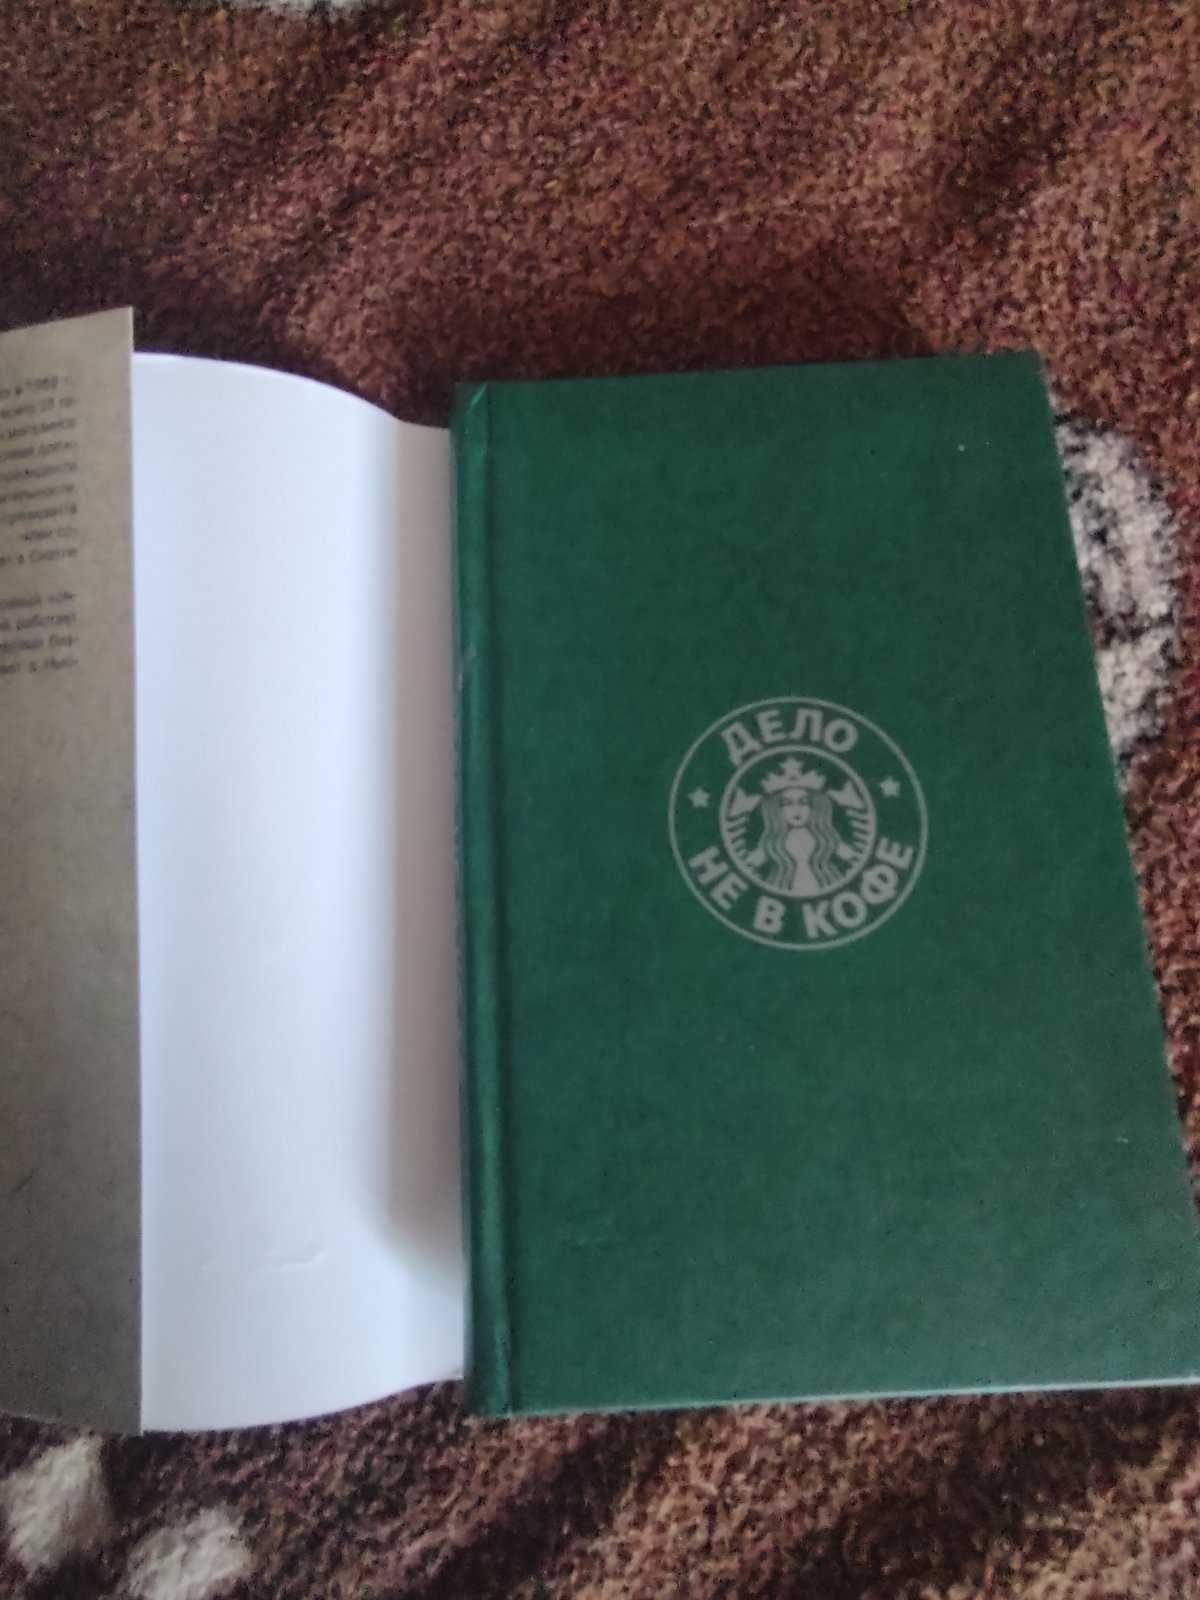 Книга "Дело не в кофе: Корпоративная культура Starbucks"